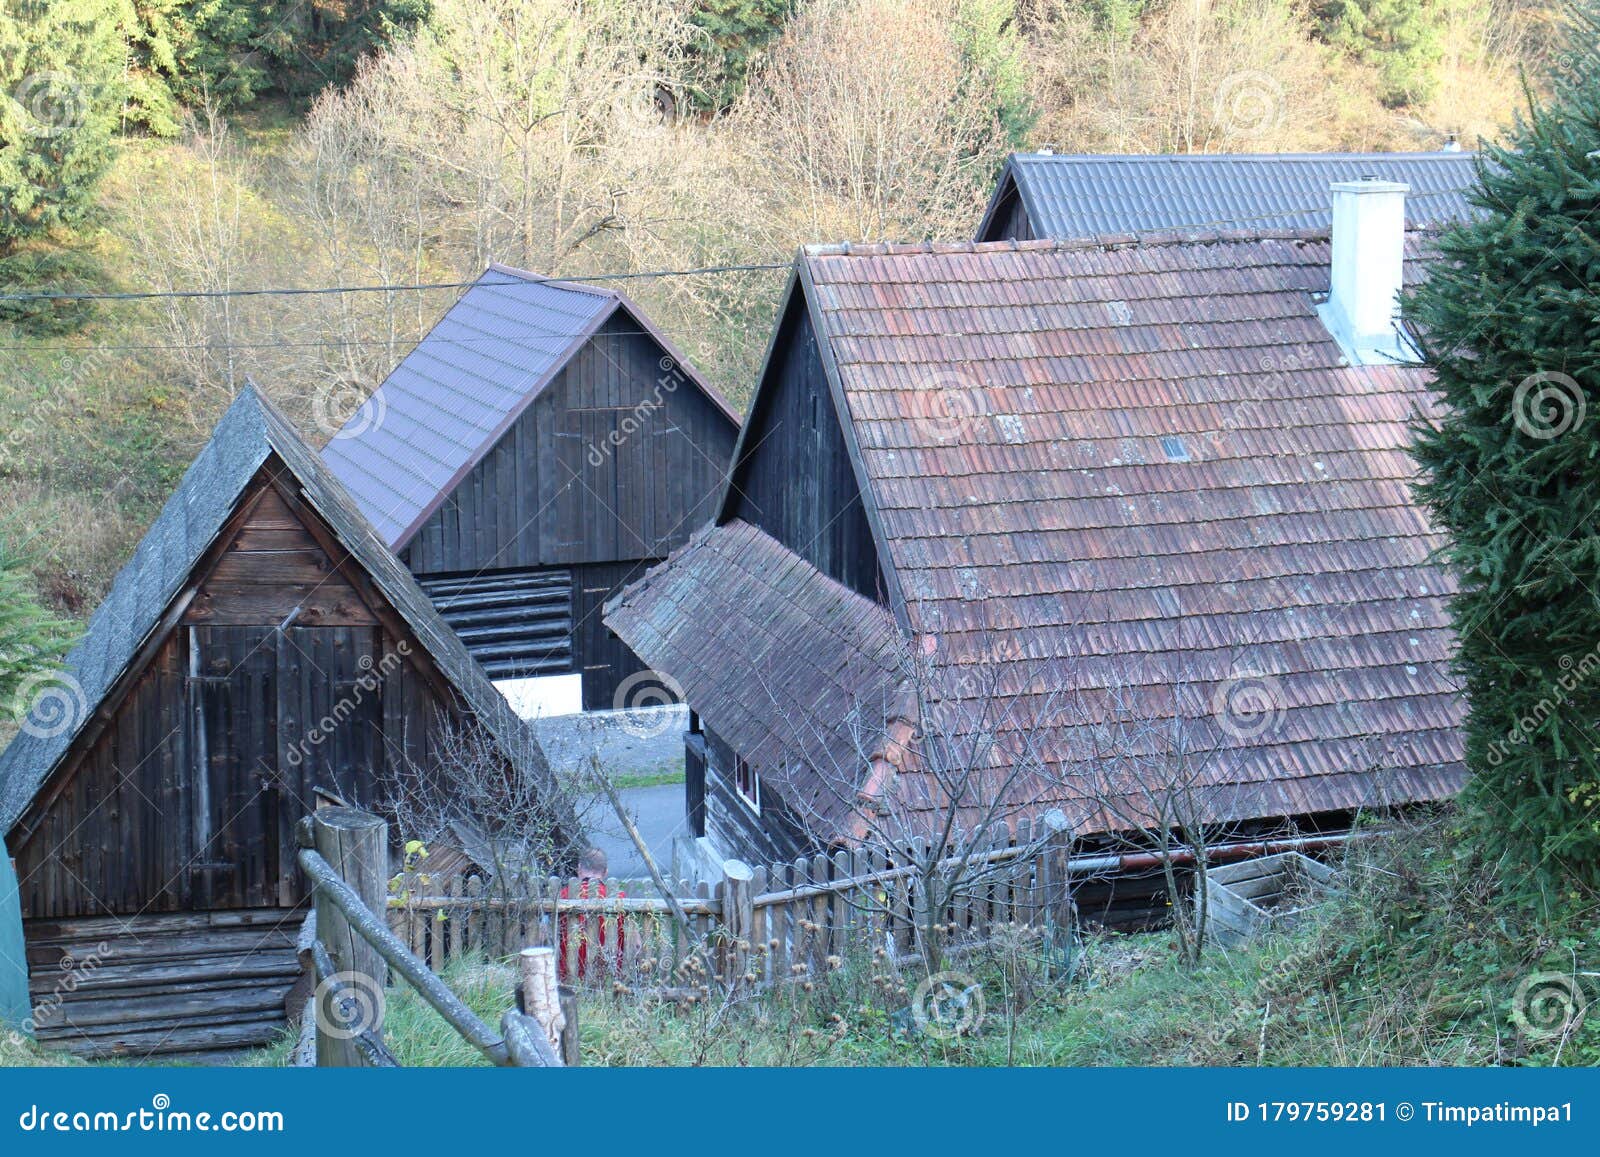 log cabin house in nizna boca village and municipality in liptovsky mikulas district, slovakia